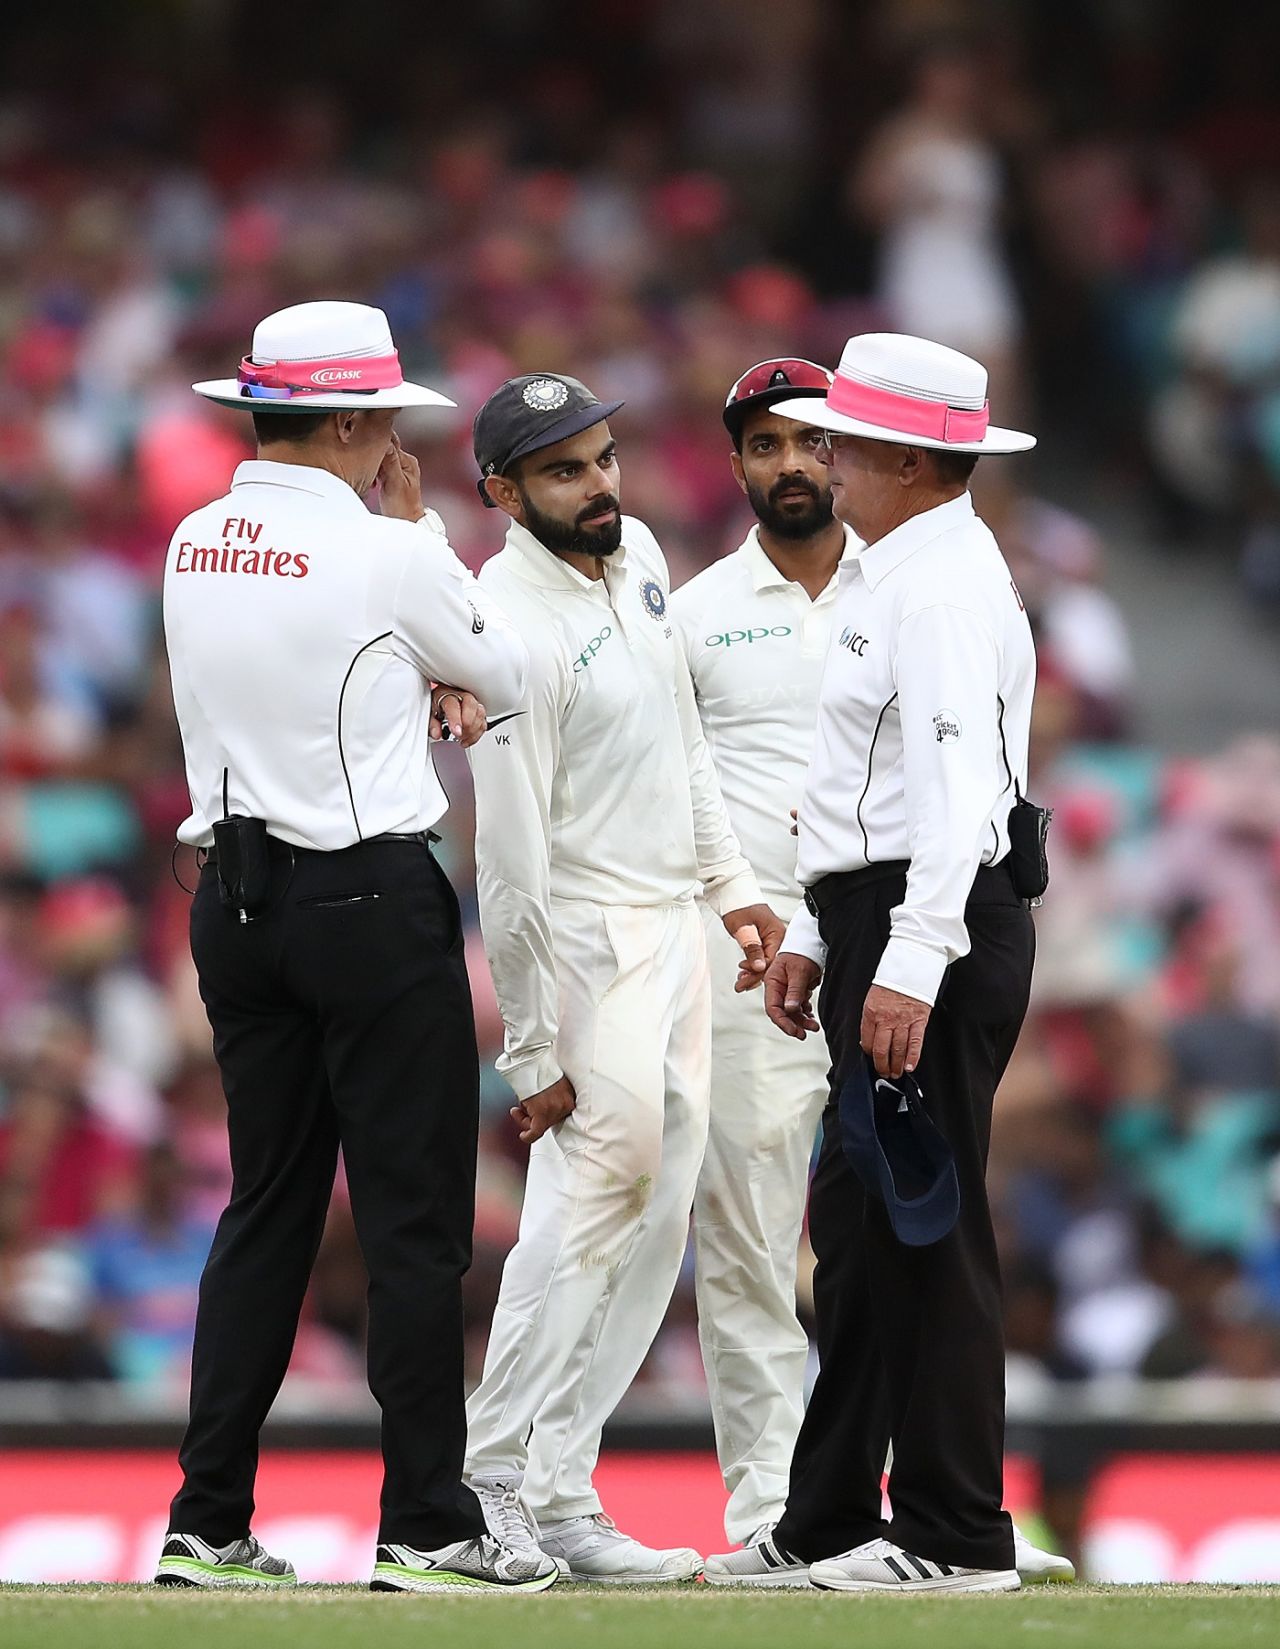 Virat Kohli and Ajinkya Rahane, the India captain and vice-captain respectively, have a chat with the on-field umpires, Australia v India, 4th Test, Sydney, 3rd day, January 5, 2019